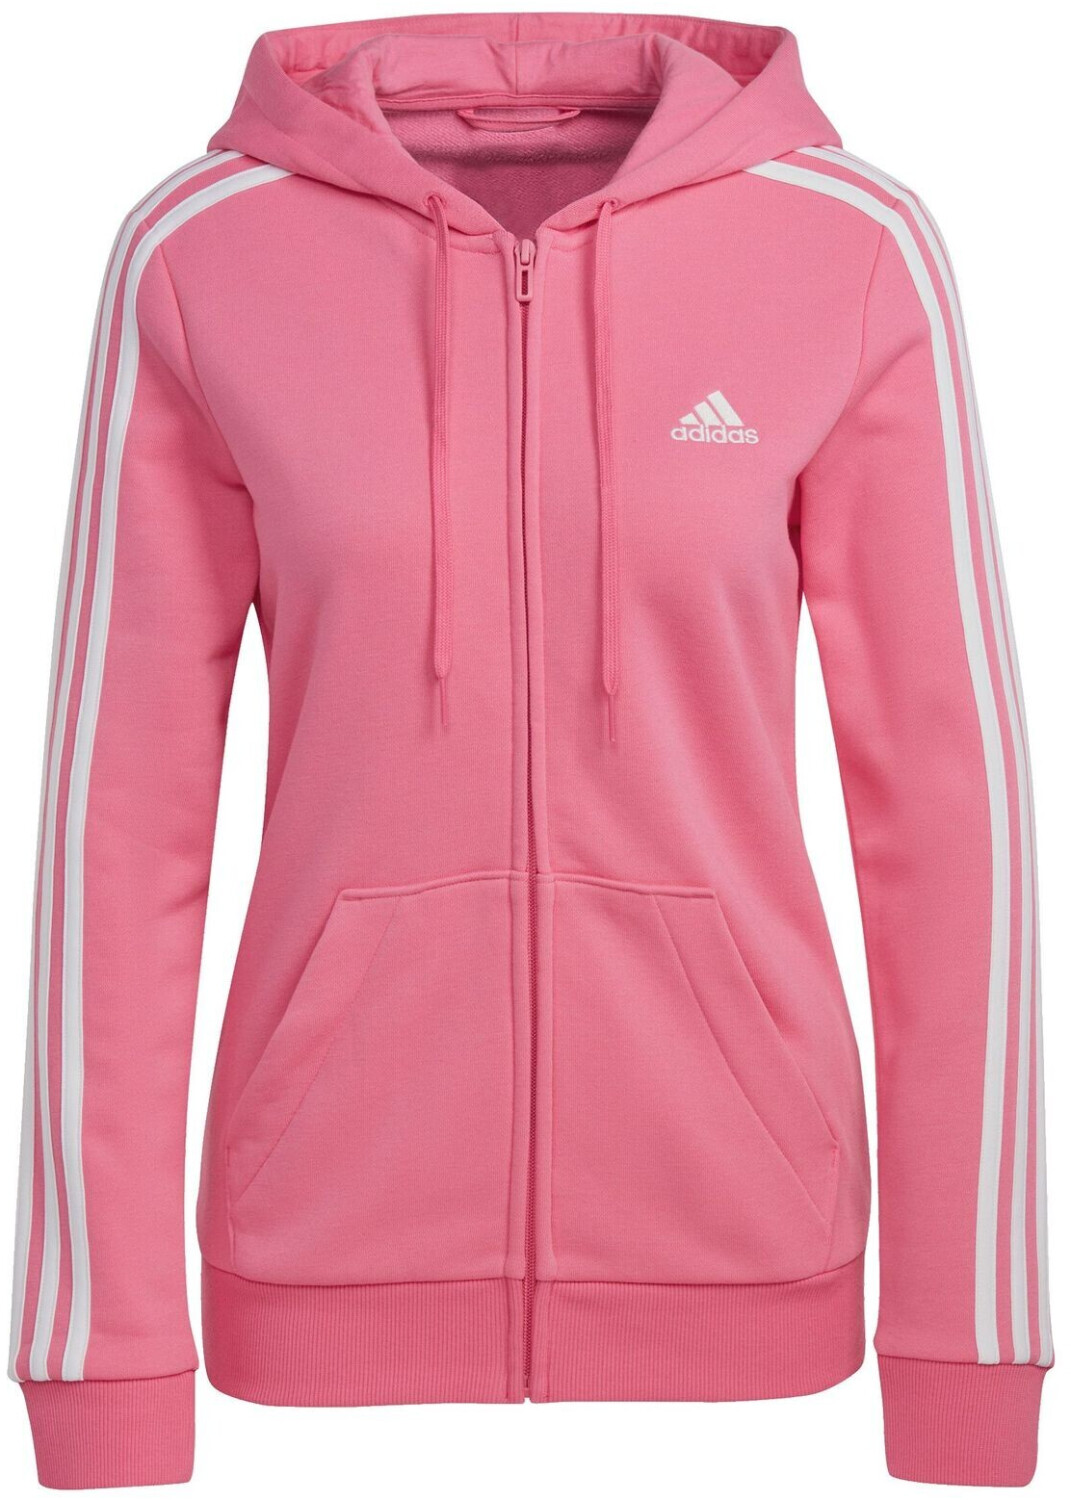 magenta | Preisvergleich pulse bei Adidas 35,90 3S Fleece ab Jacket € Sportswear (ID0032)